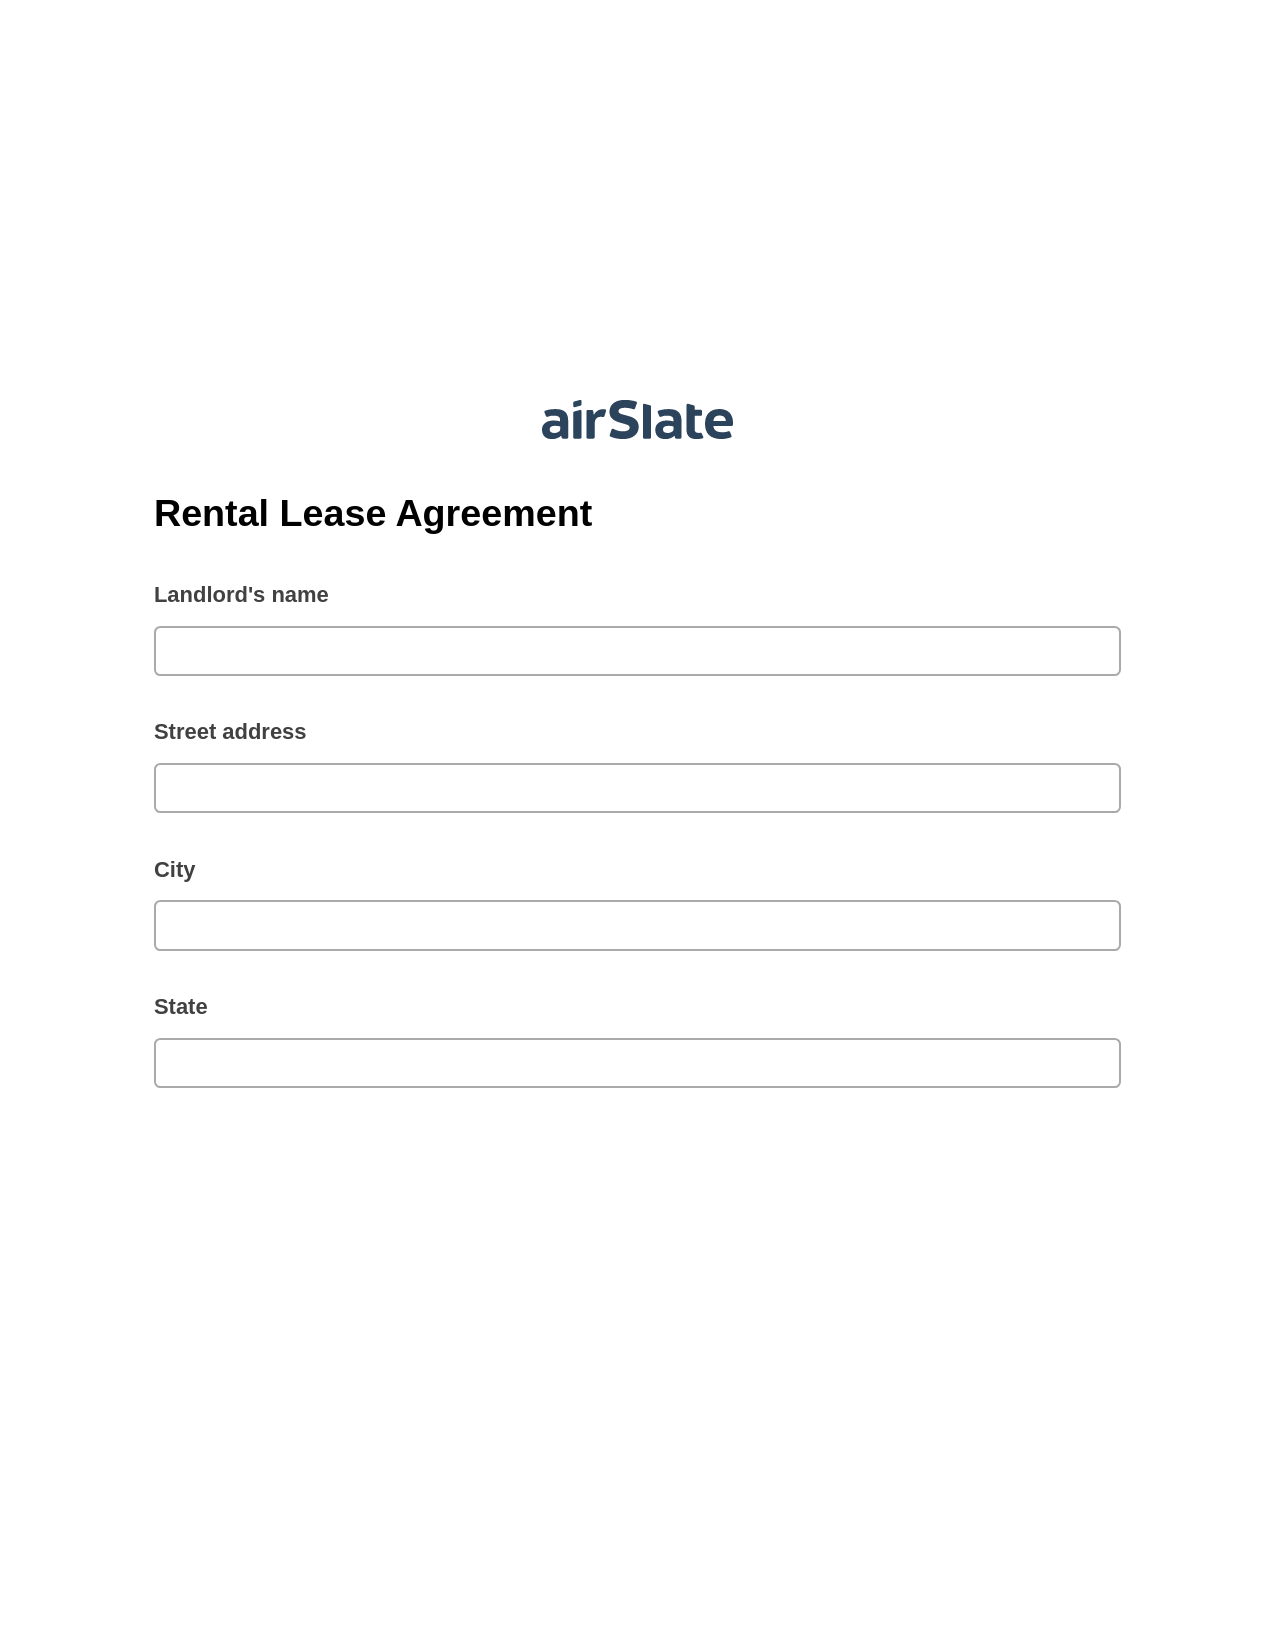 Rental Lease Agreement Pre-fill from CSV File Dropdown Options Bot, Jira Bot, Google Drive Bot